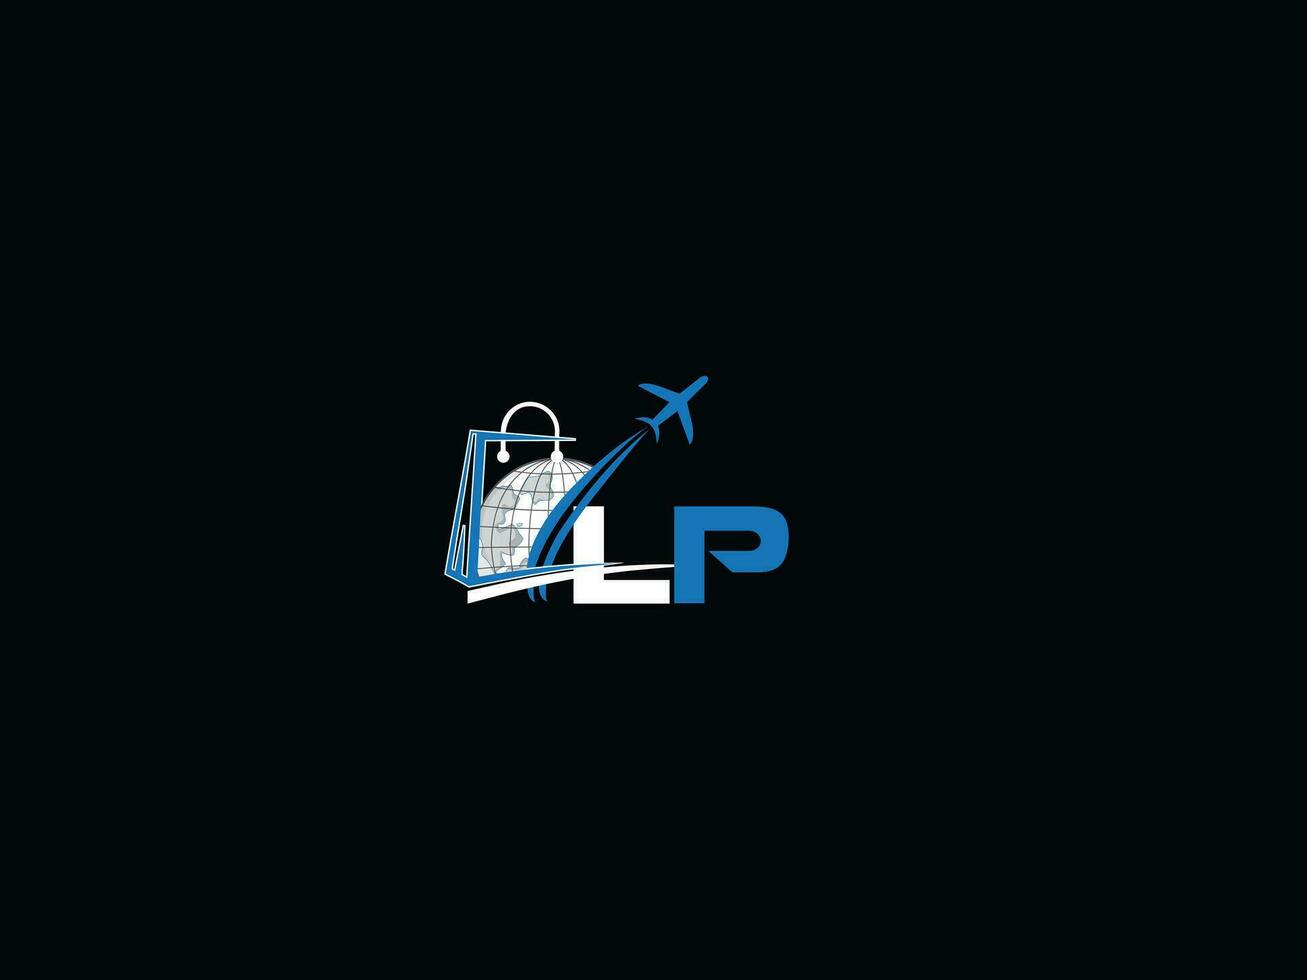 simples lp global logotipo vetor, inicial viajando lp logotipo carta vetor